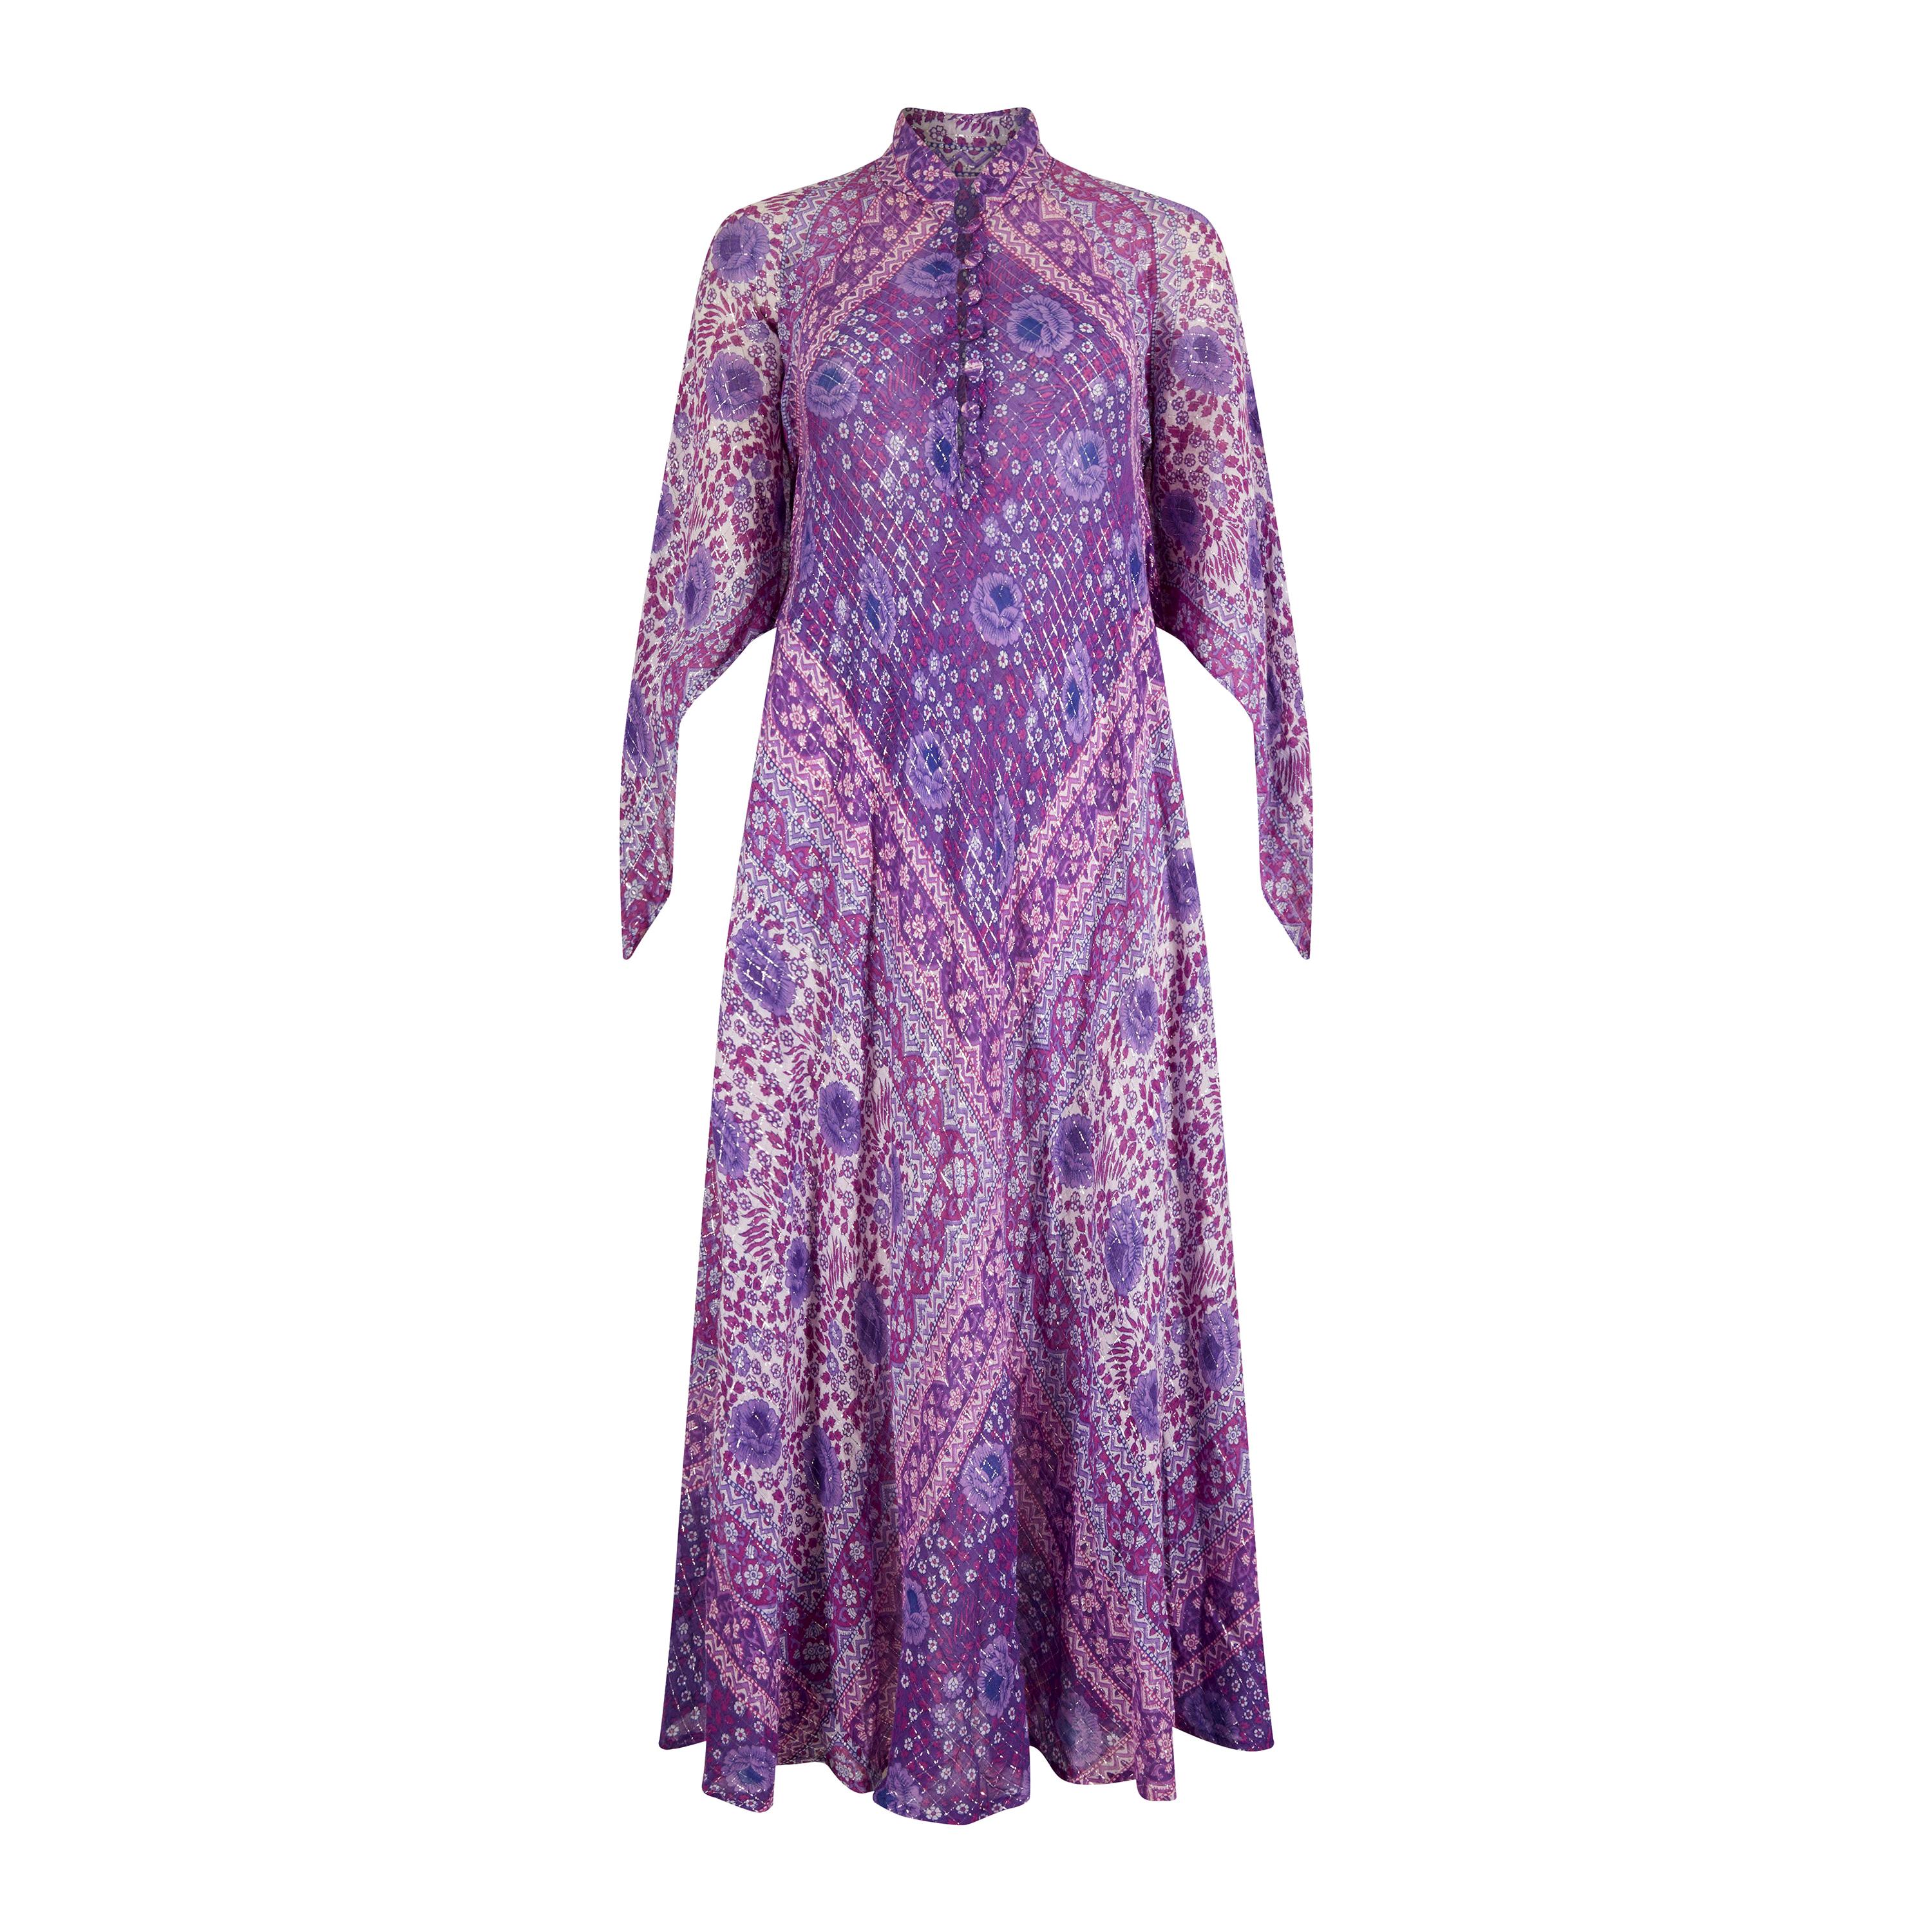 1978 Rare Purple Adini Sultana Dress With Angel Sleeves and Metallic Thread